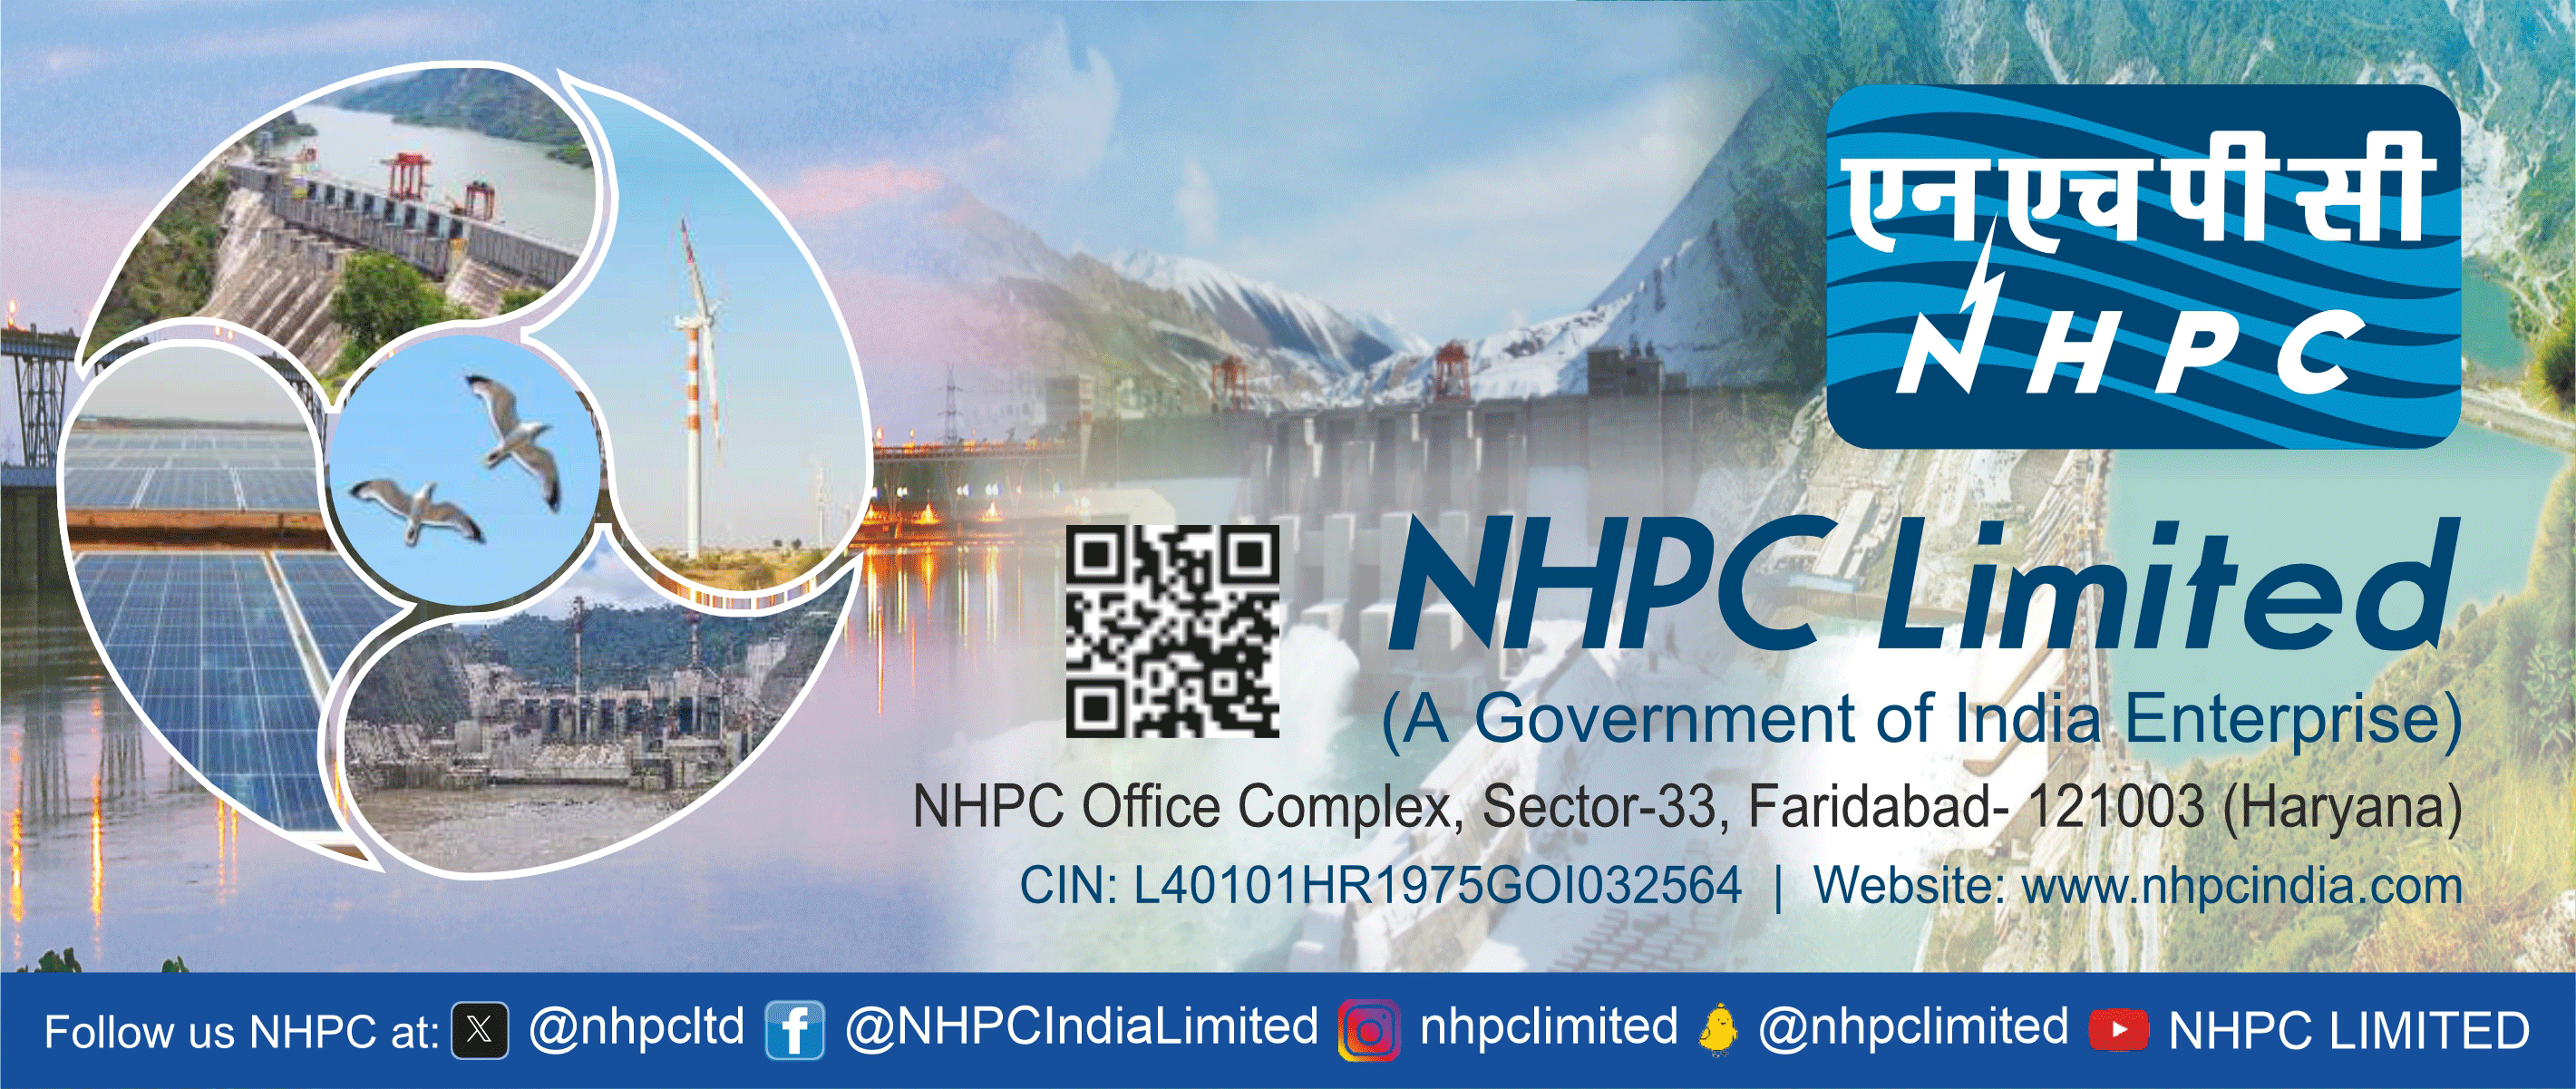 NHPC stock latest news update 🤑NHPC Limited target 60👈🚀 today NHPC share  latest news analysis 🔥 - YouTube